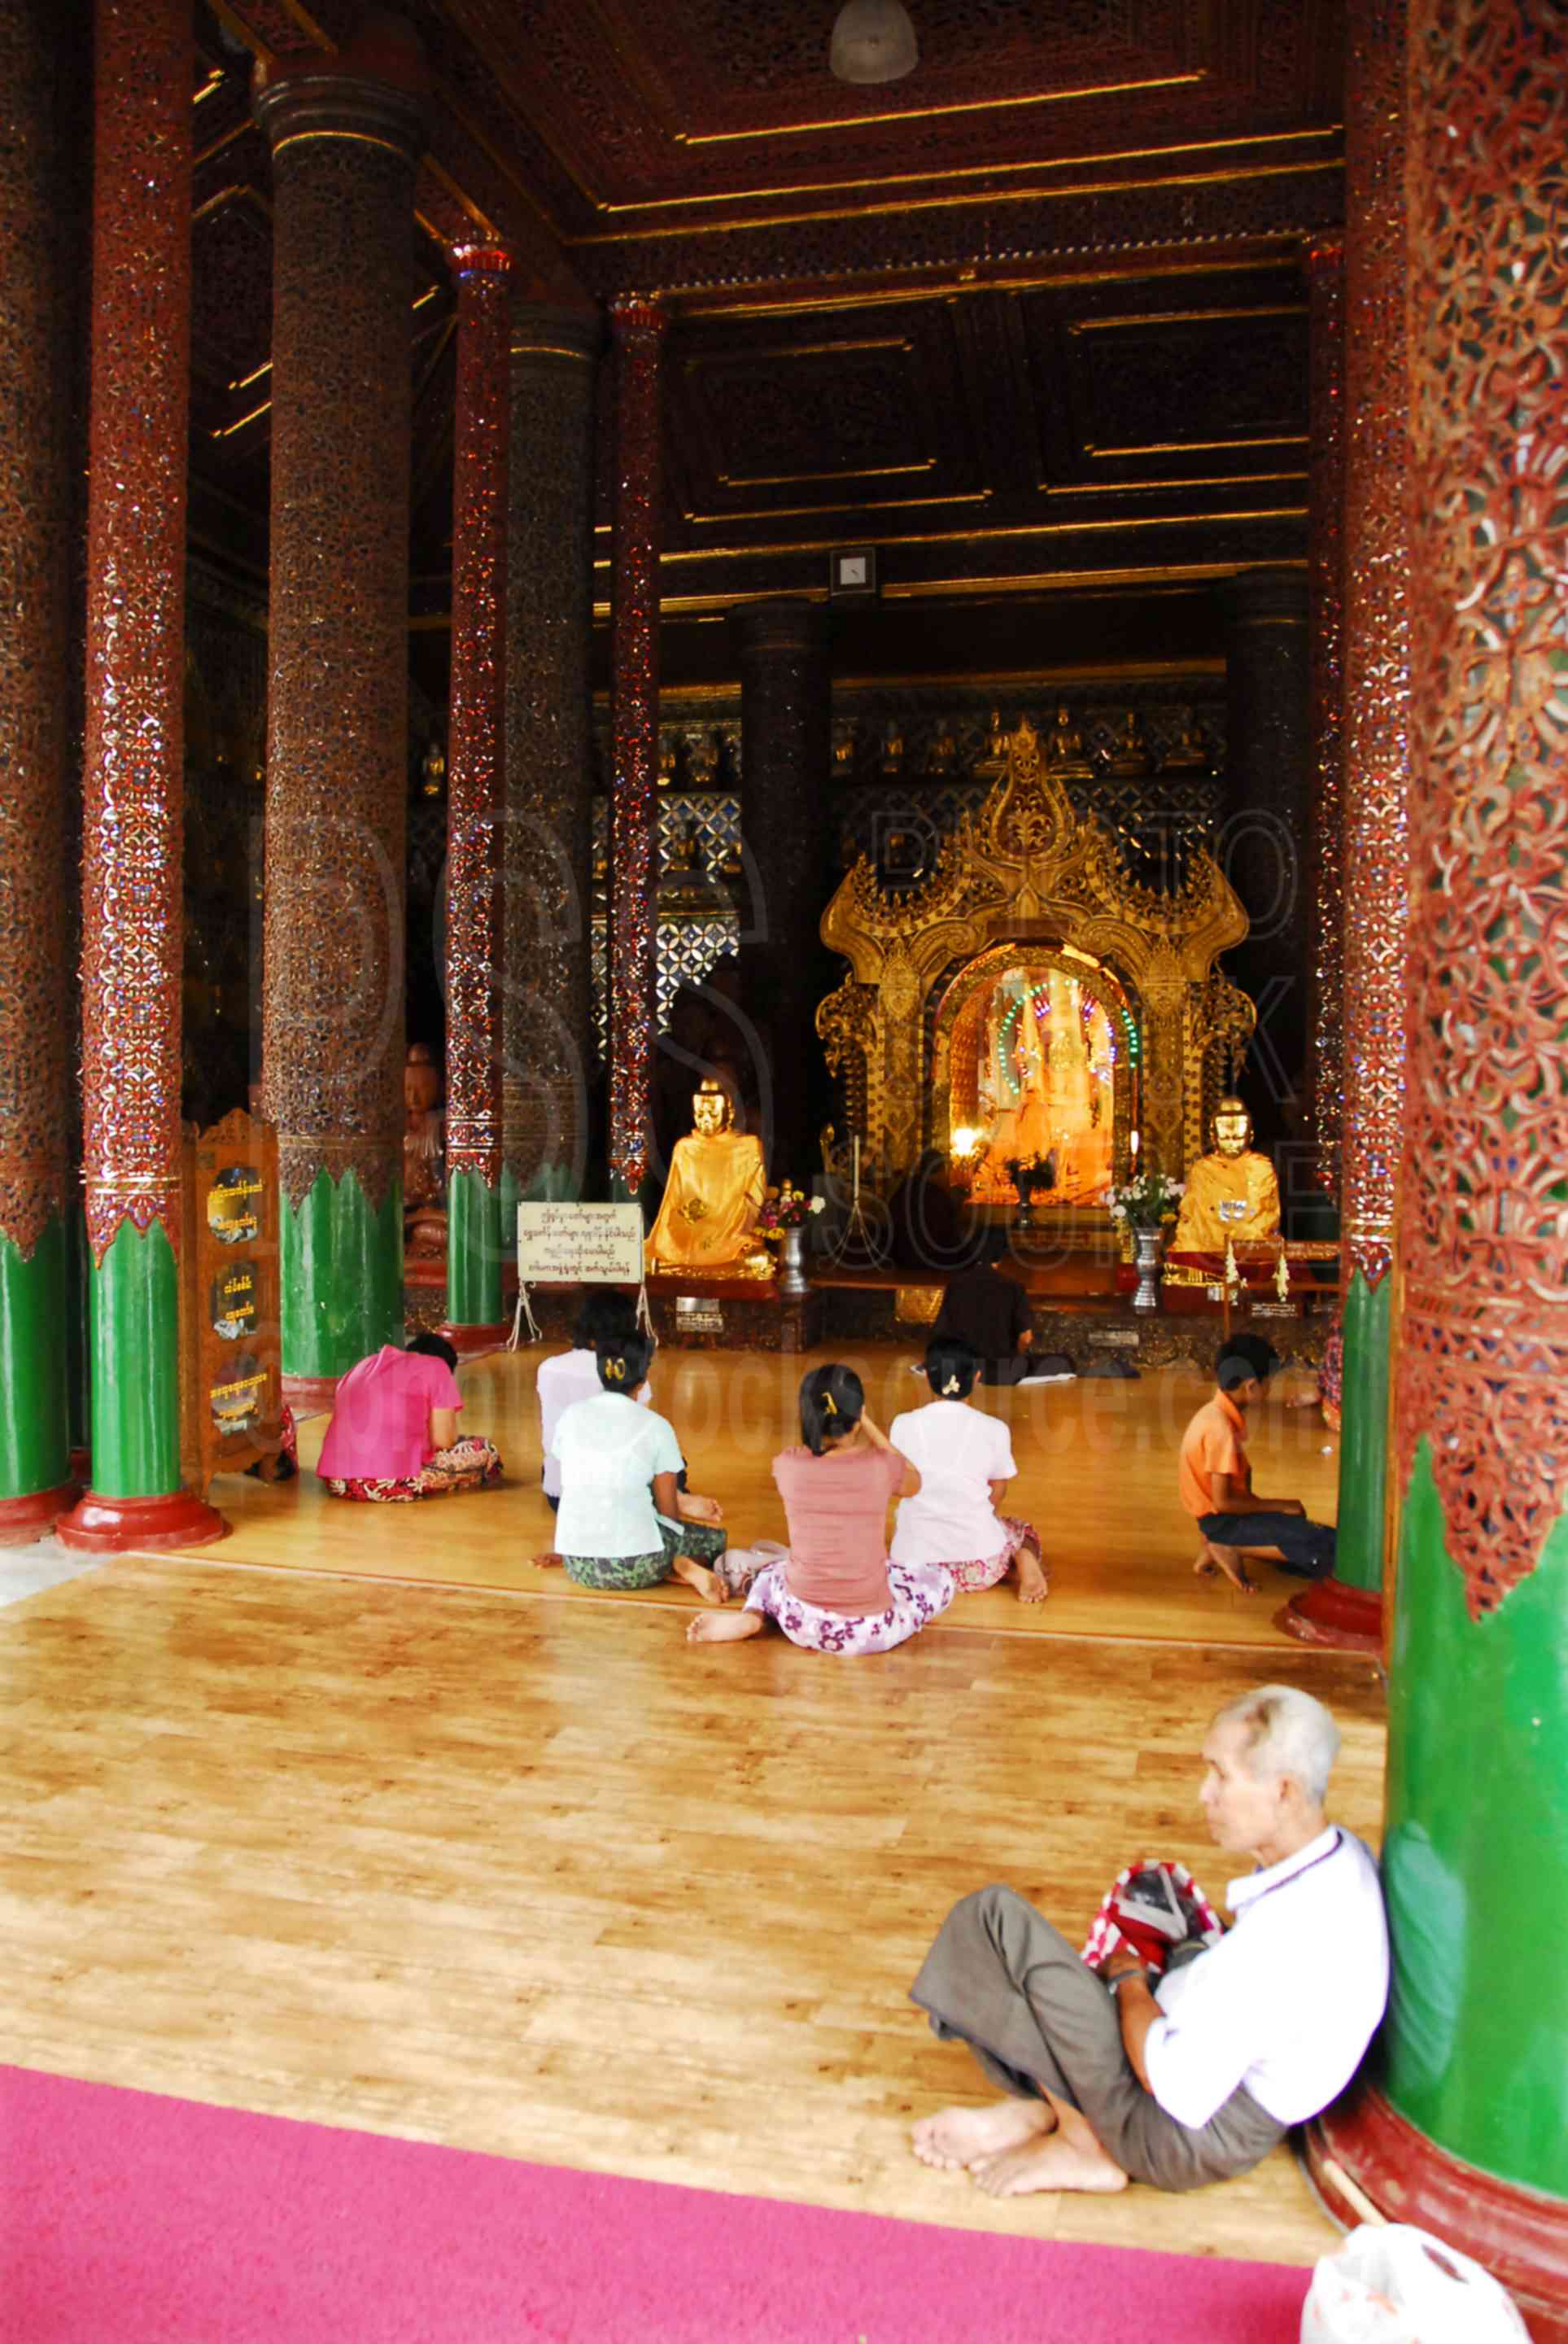 Shwedagon Pagoda Shrine,myanmar,buddhism,paya,pagoda,shwedagon zedi daw,zedi,golden pagoda,gold,golden,gold leaf,stupa,shrine,rangoon,rangon,yangoon